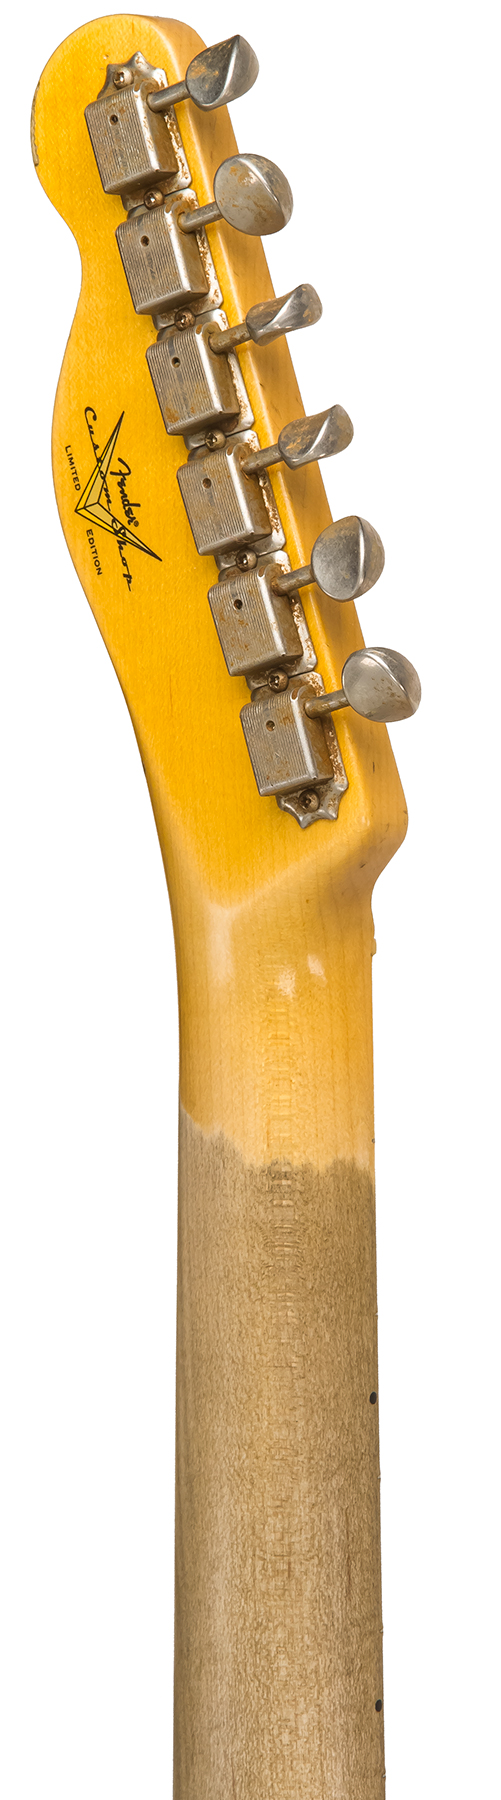 Fender Custom Shop Tele Custom 1963 2020 Ltd Rw #cz545983 - Relic Chartreuse Sparkle - Televorm elektrische gitaar - Variation 5